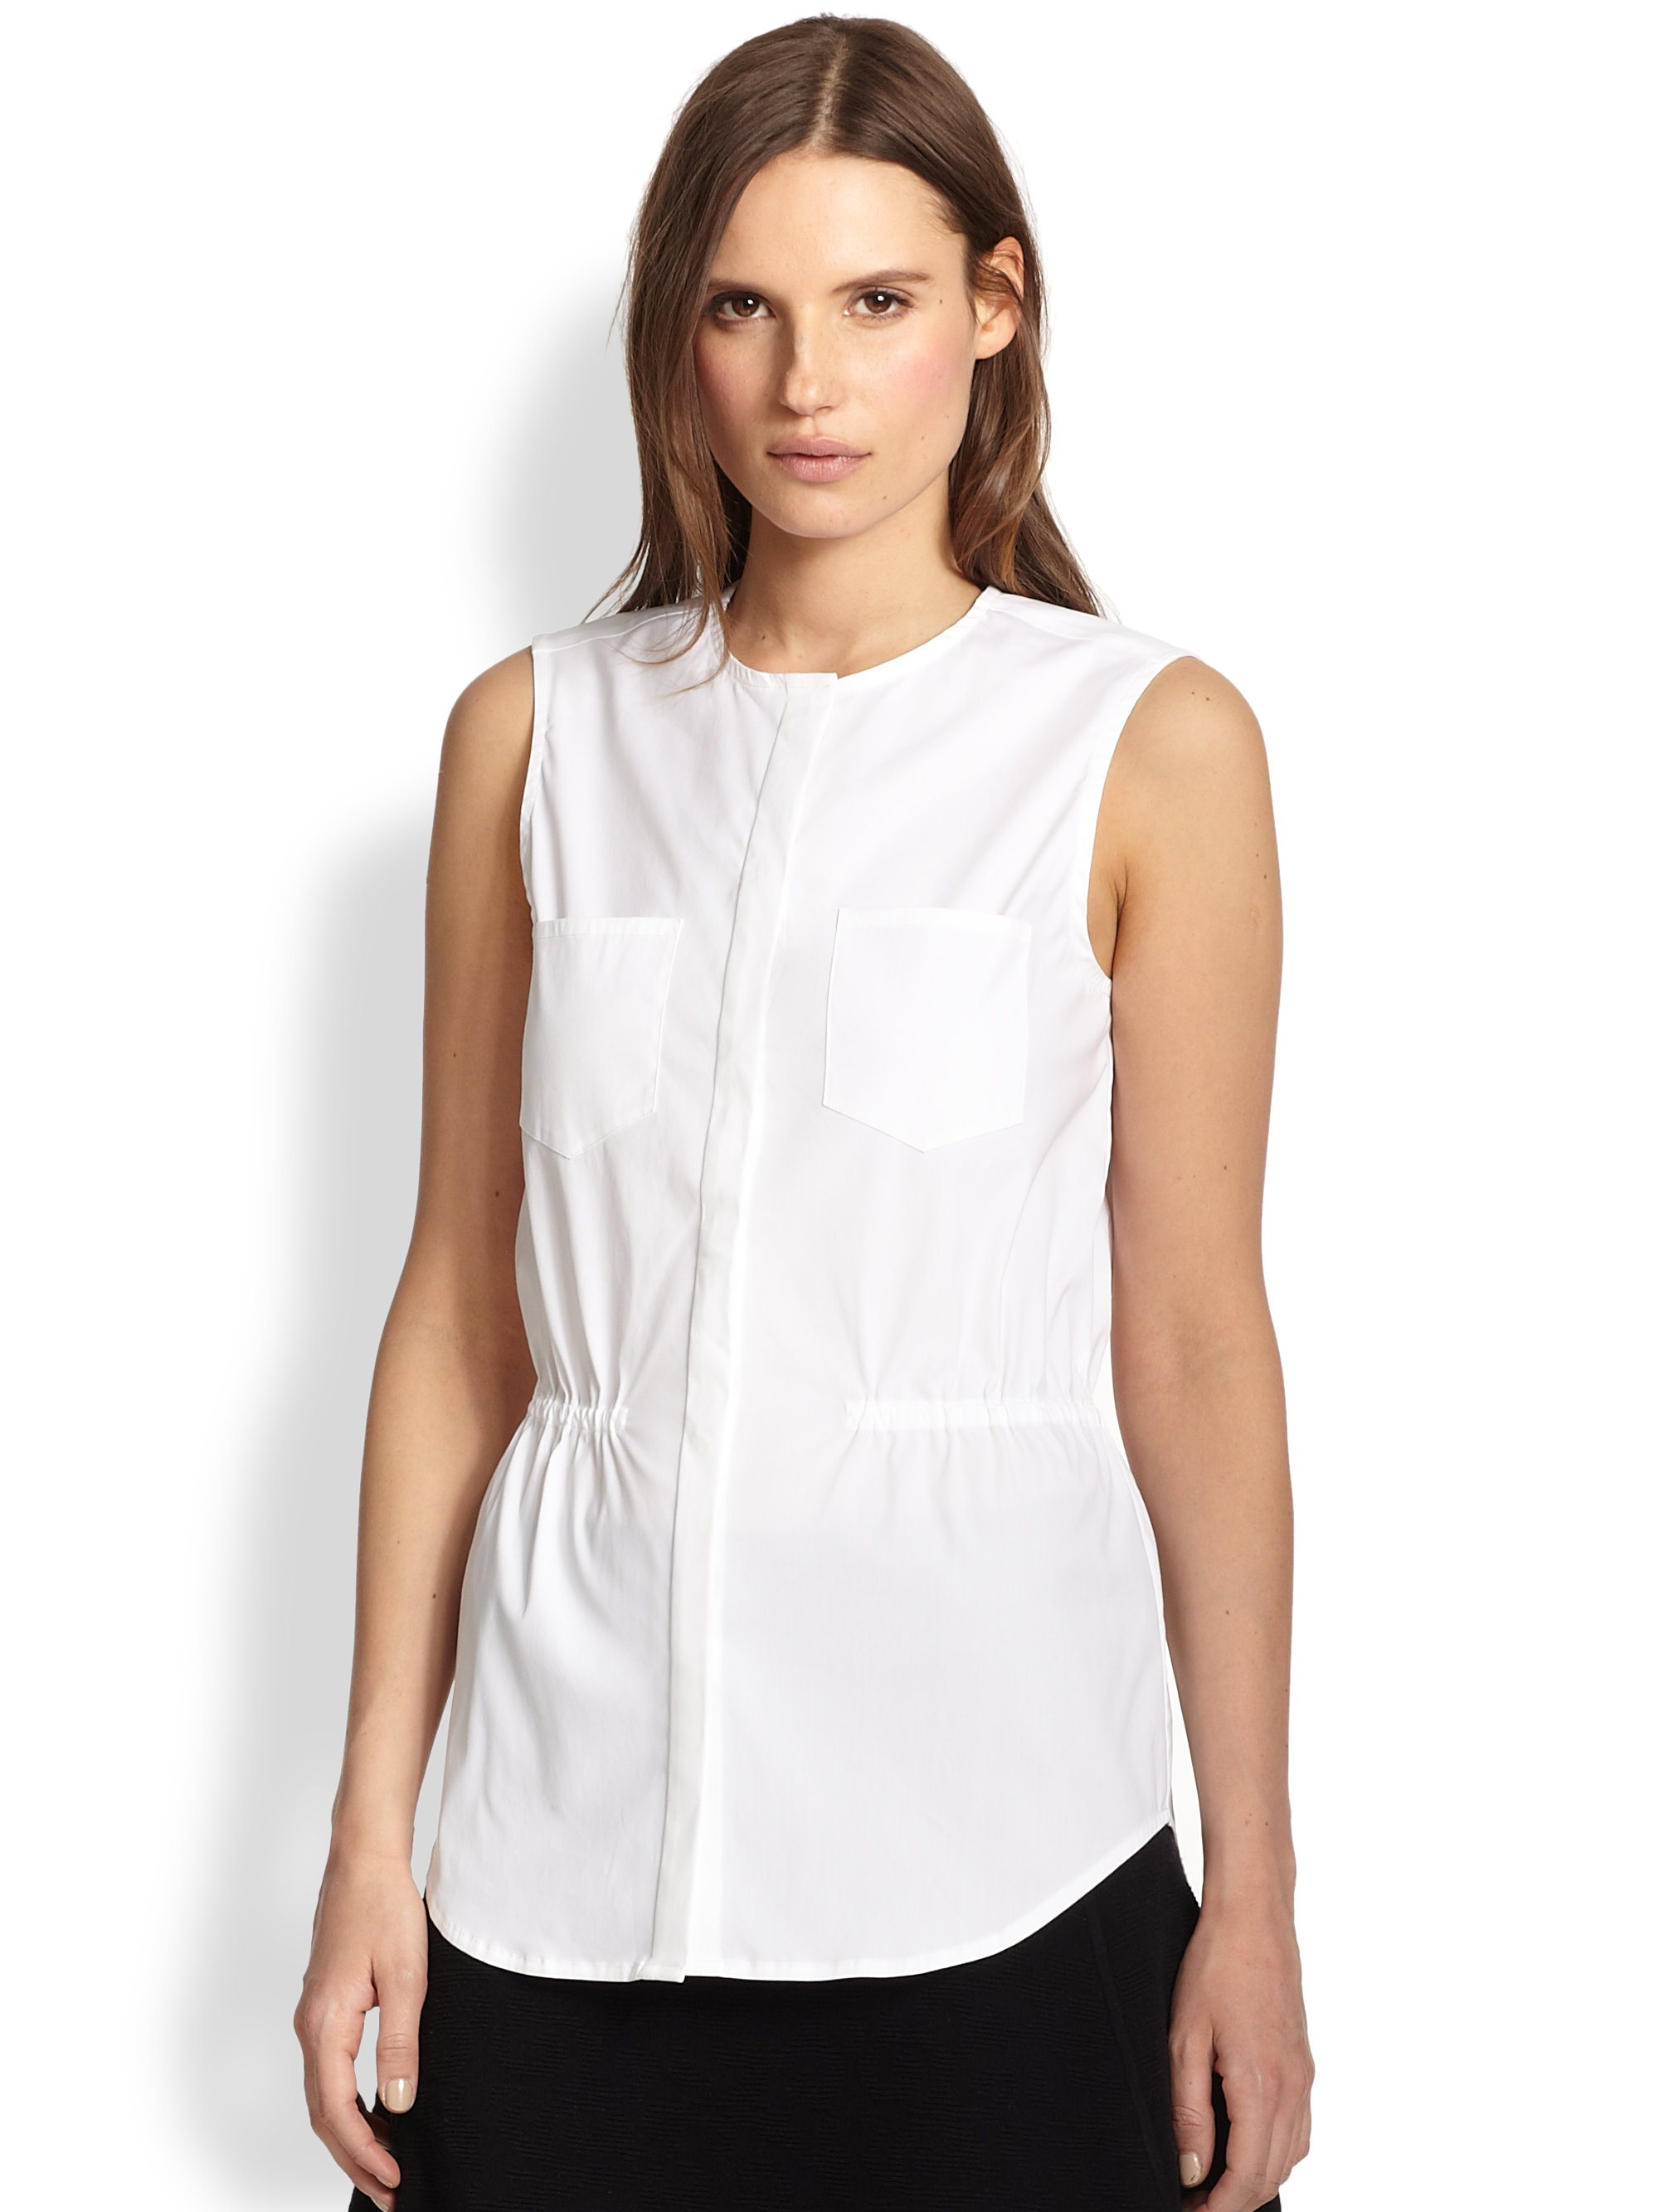 Lyst - Theory Kenan Gathered-Waist Sleeveless Shirt in White